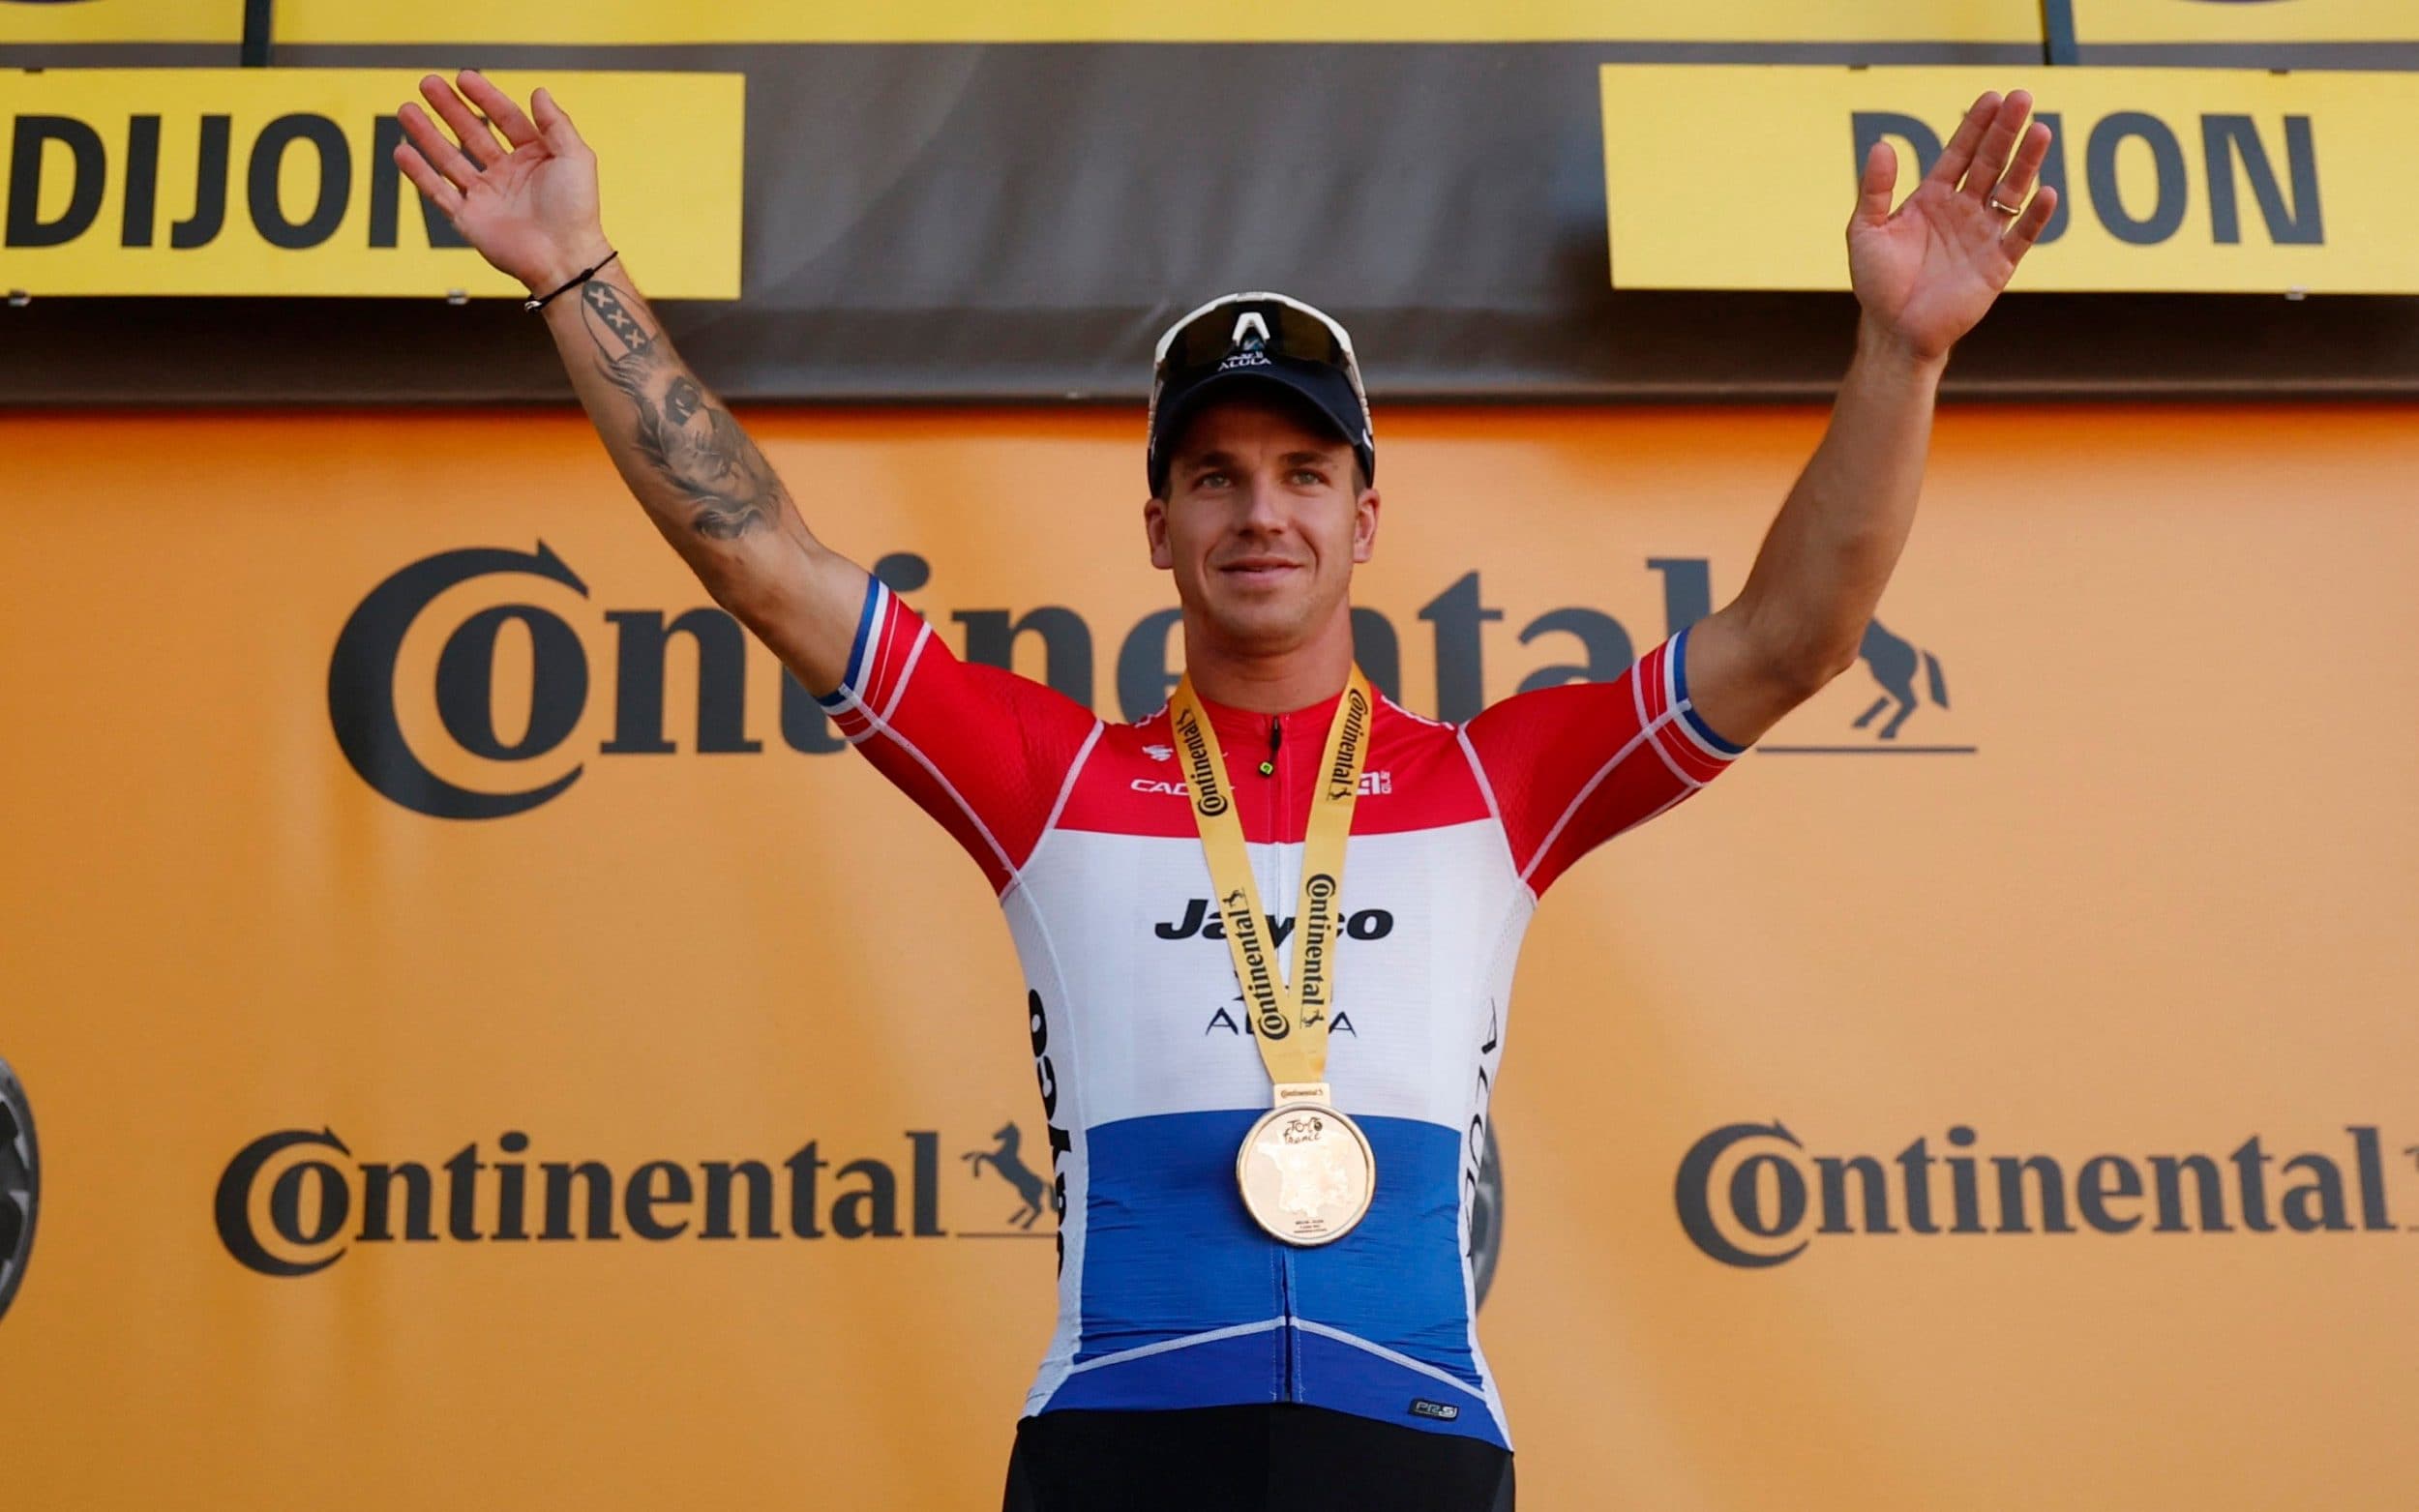 Mark Cavendish misses out as Dylan Groenewegen wins stage six at Tour de France